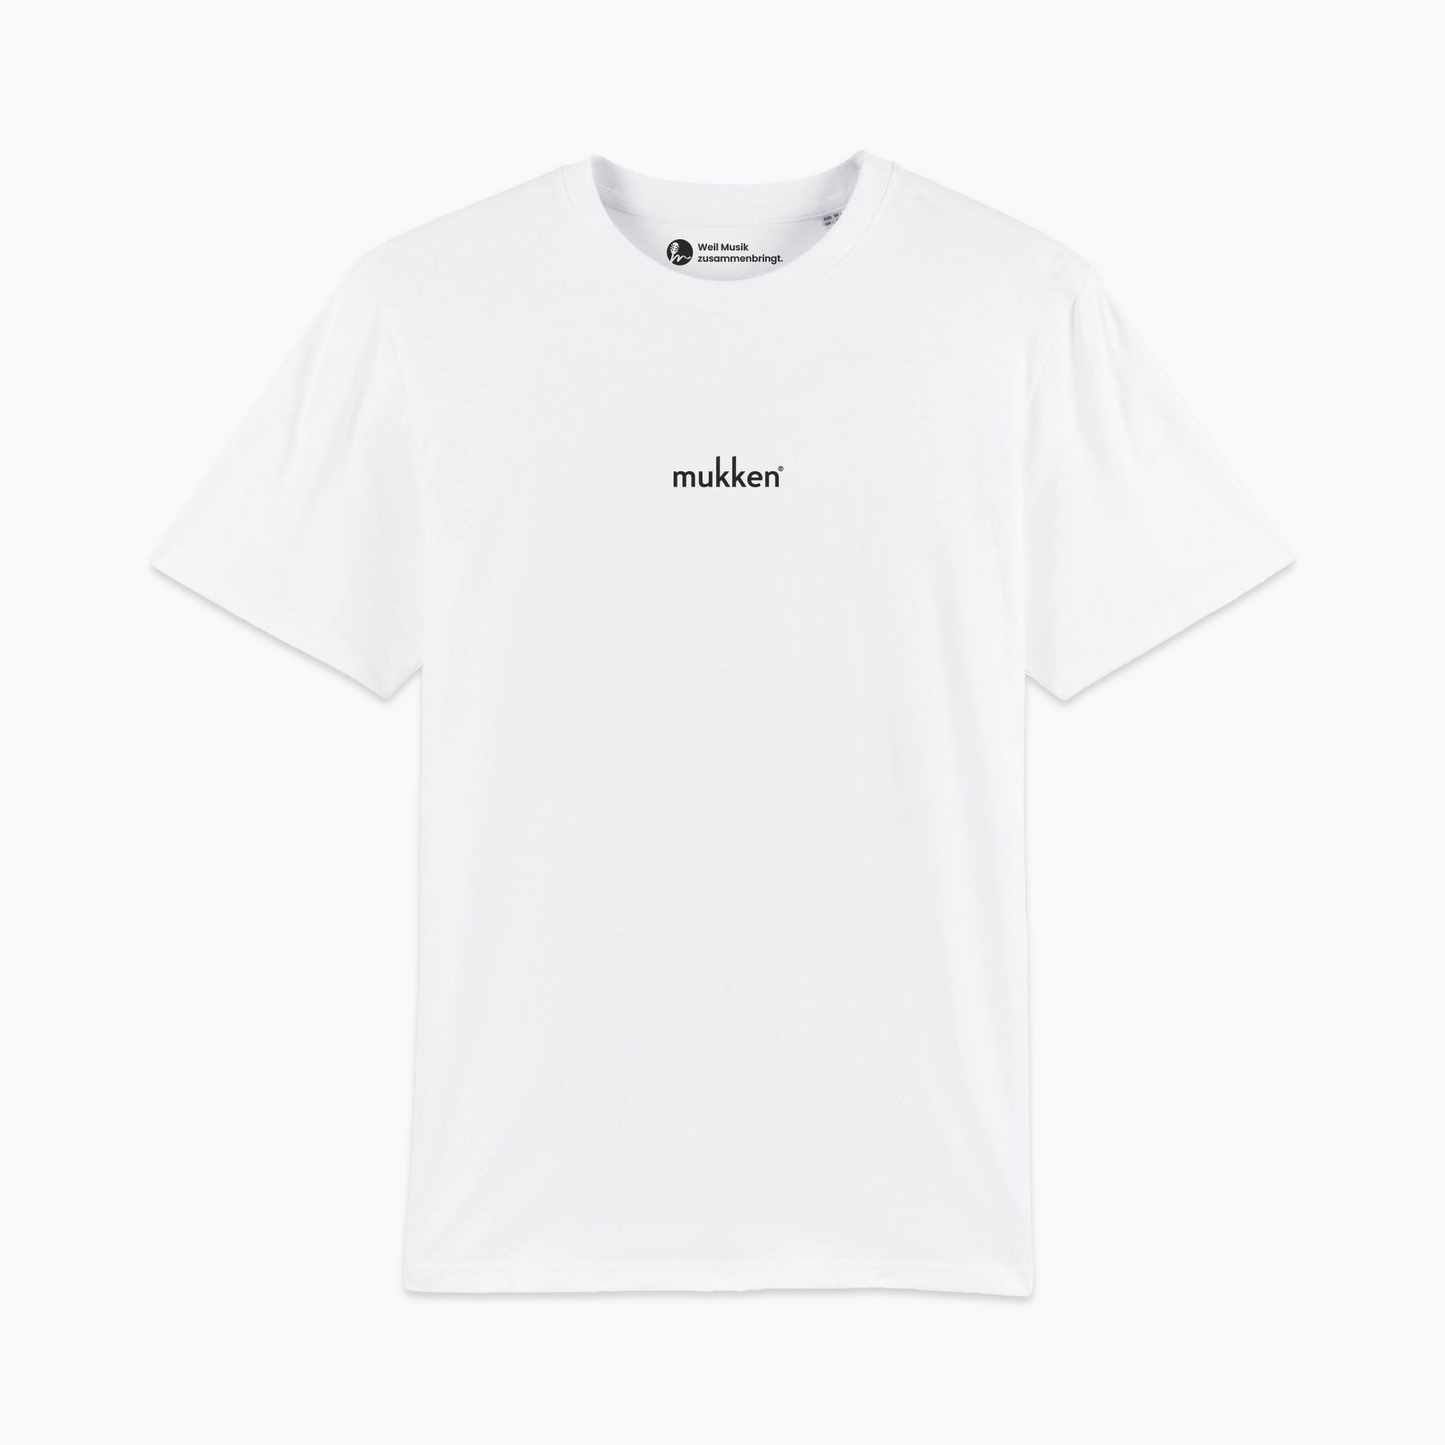 mukken T-Shirt white